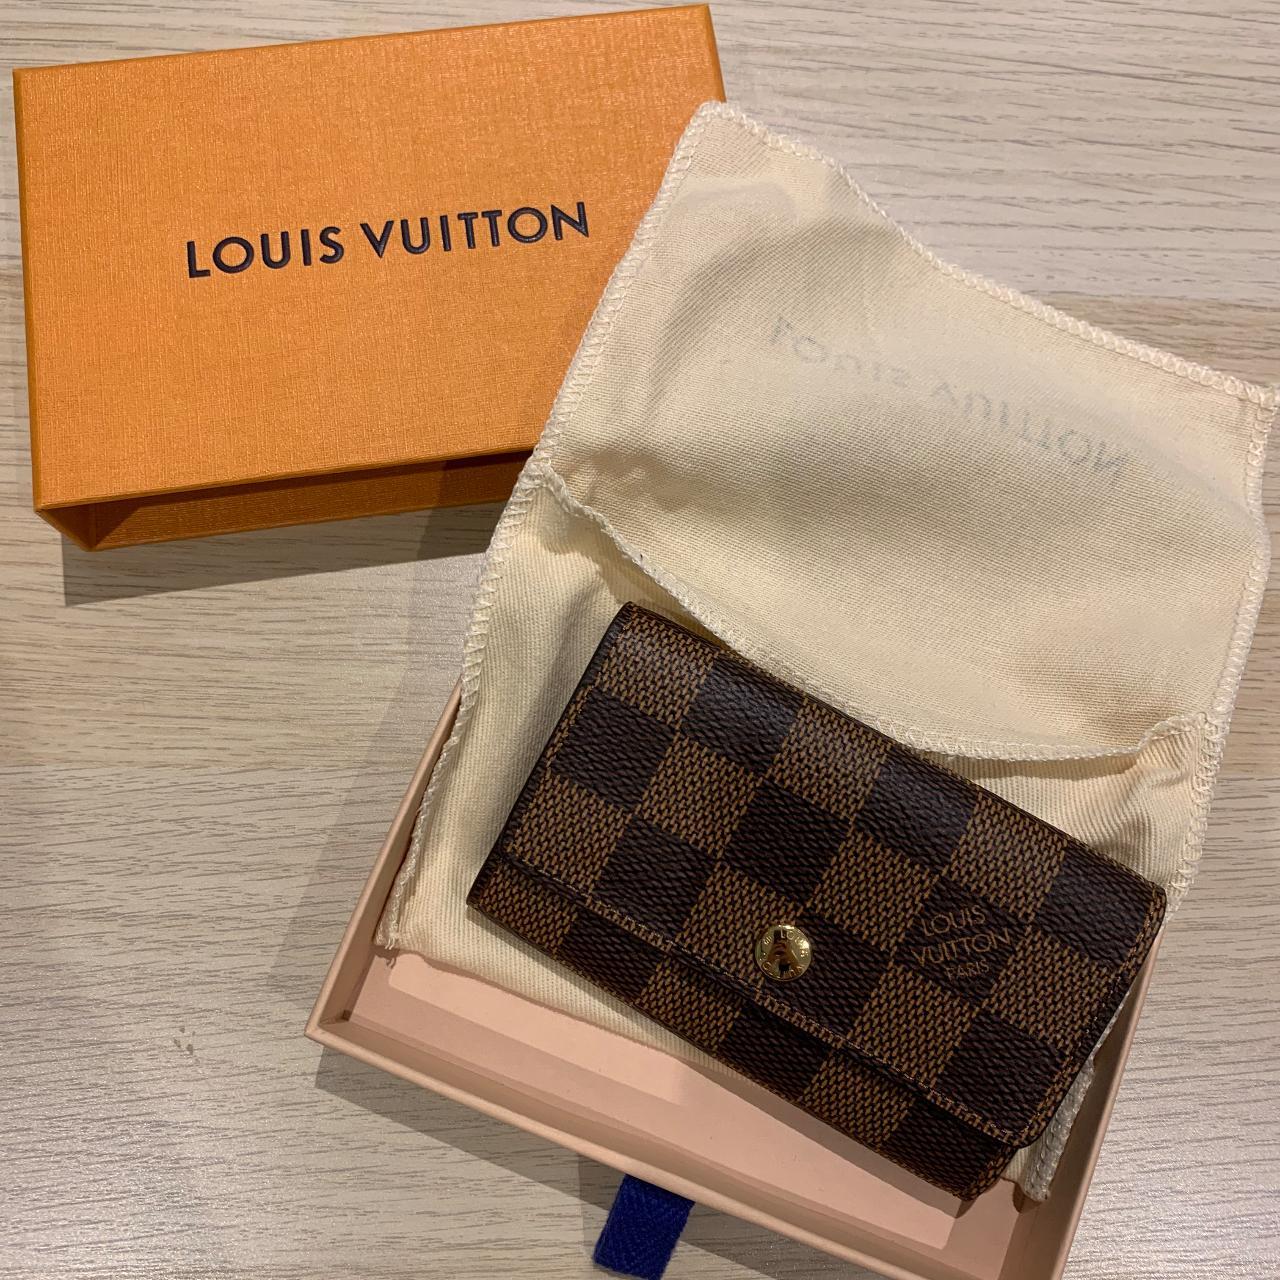 Louis Vuitton purse box - Depop